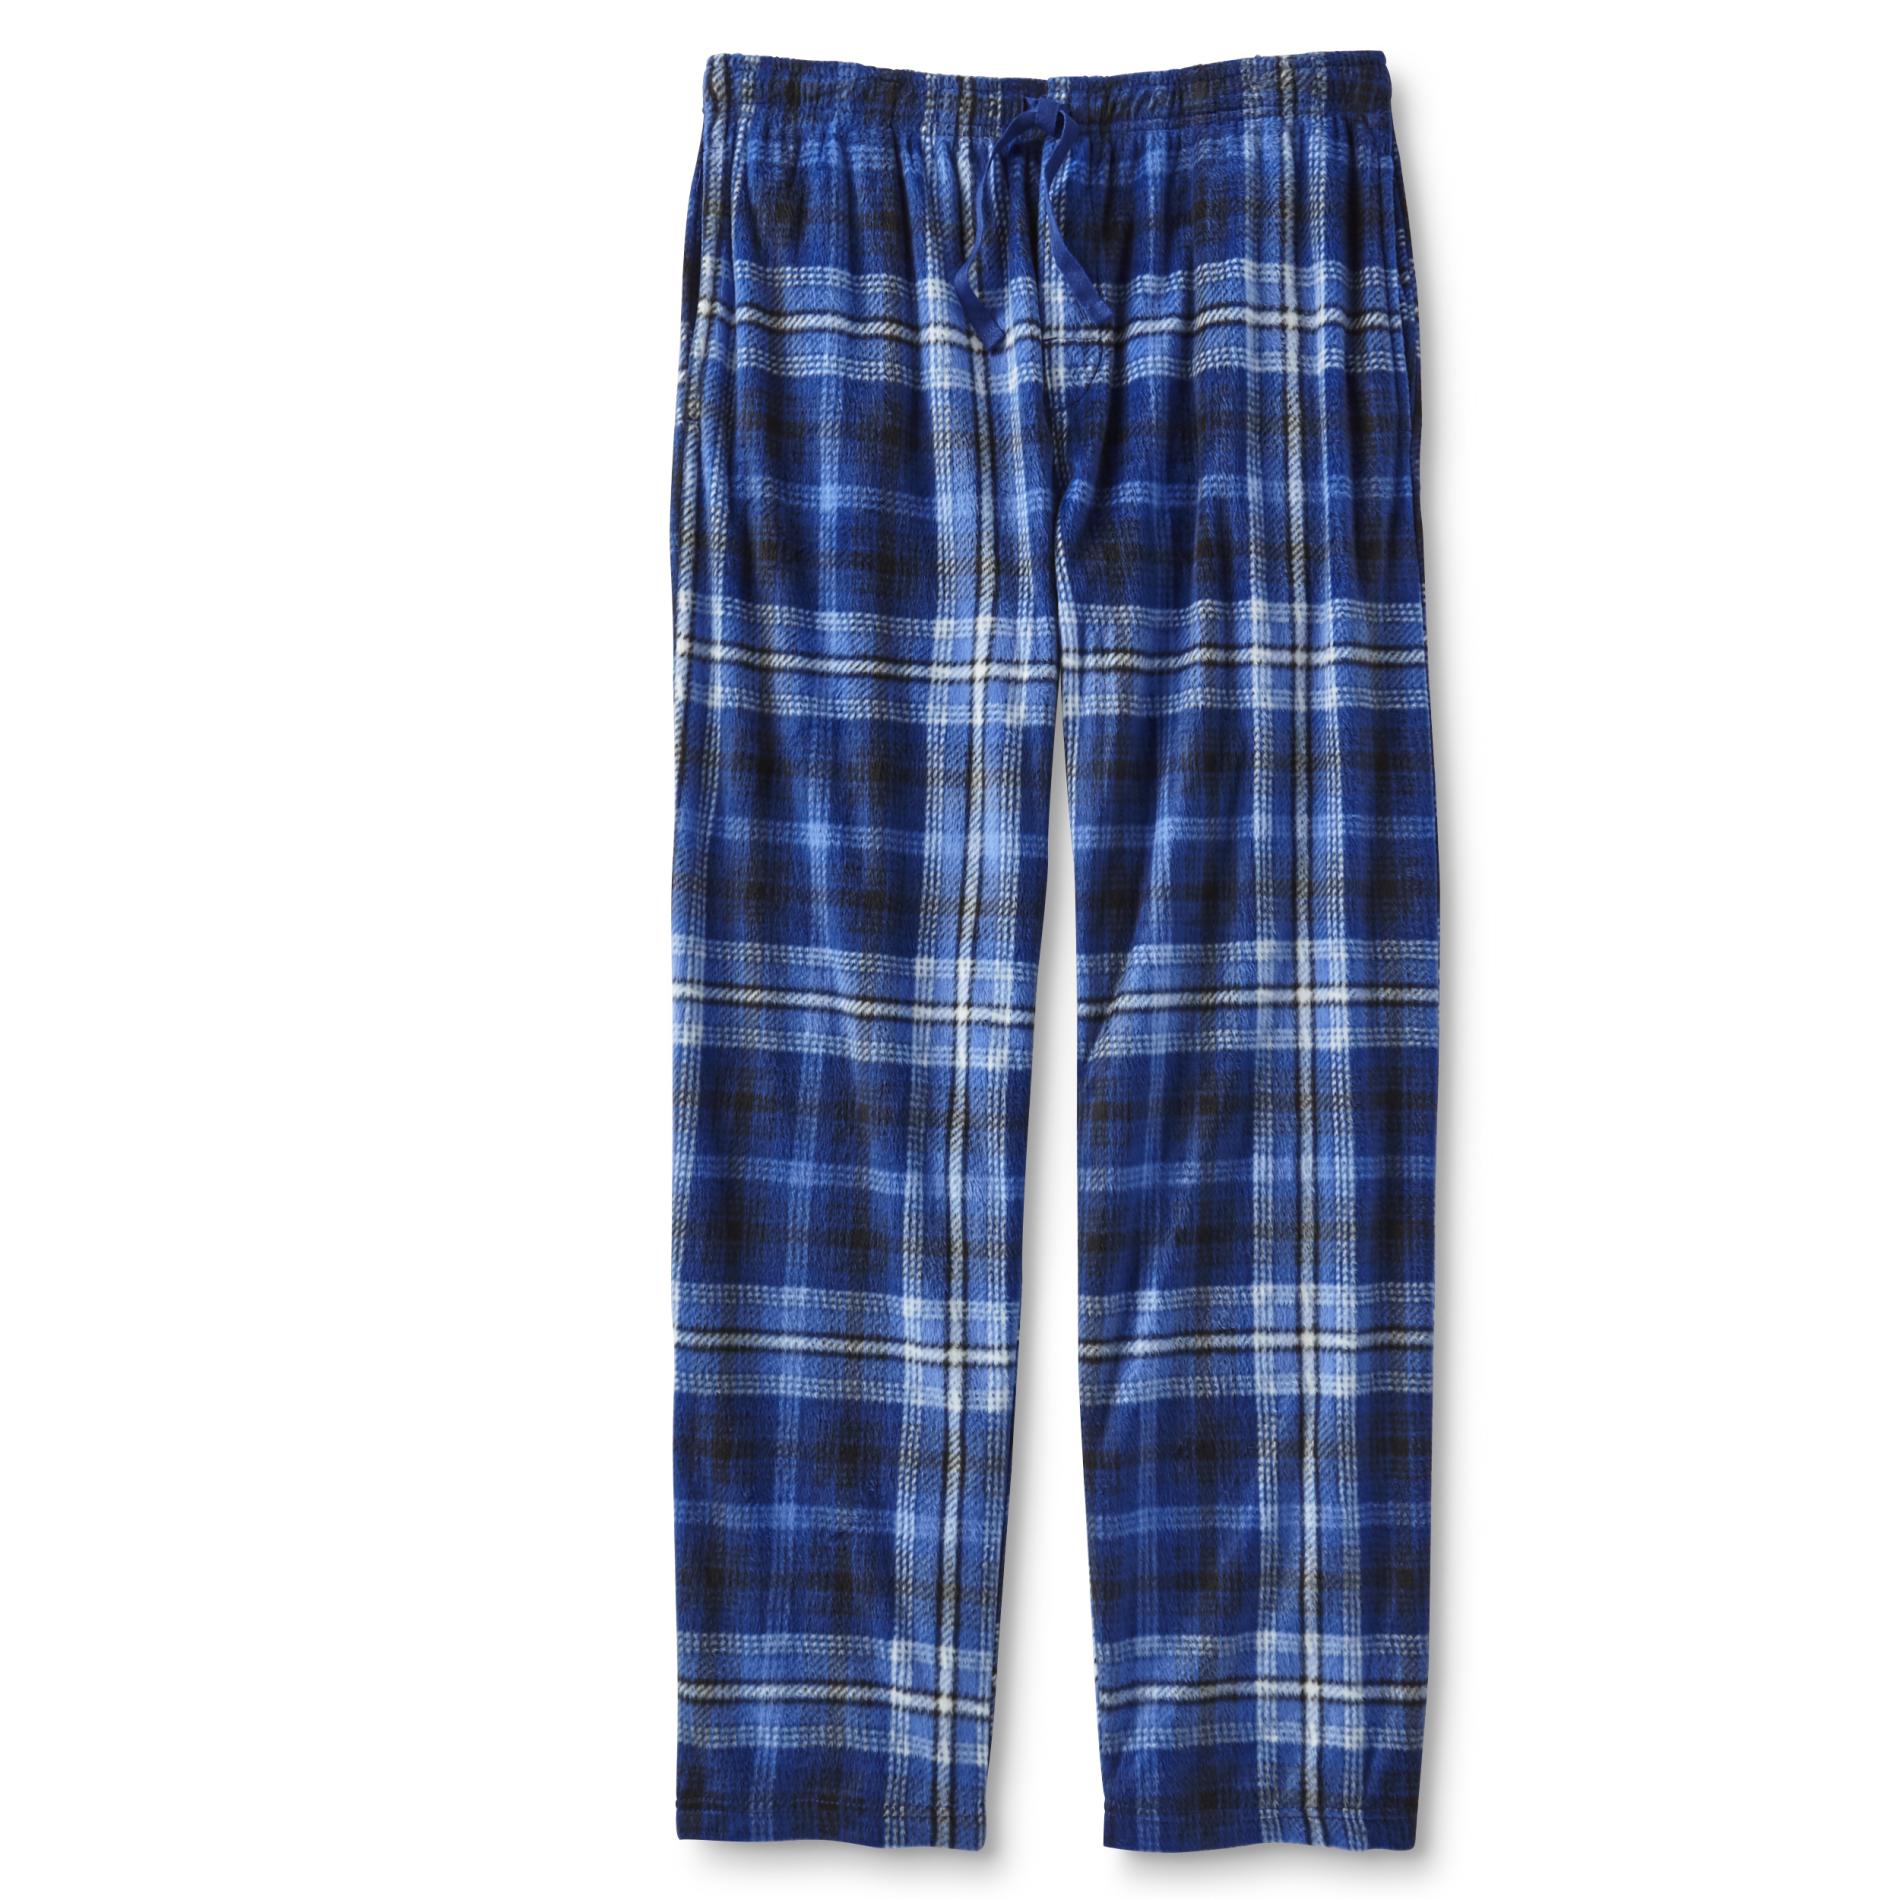 Joe Boxer Men's Microfleece Pajama Pants - Plaid